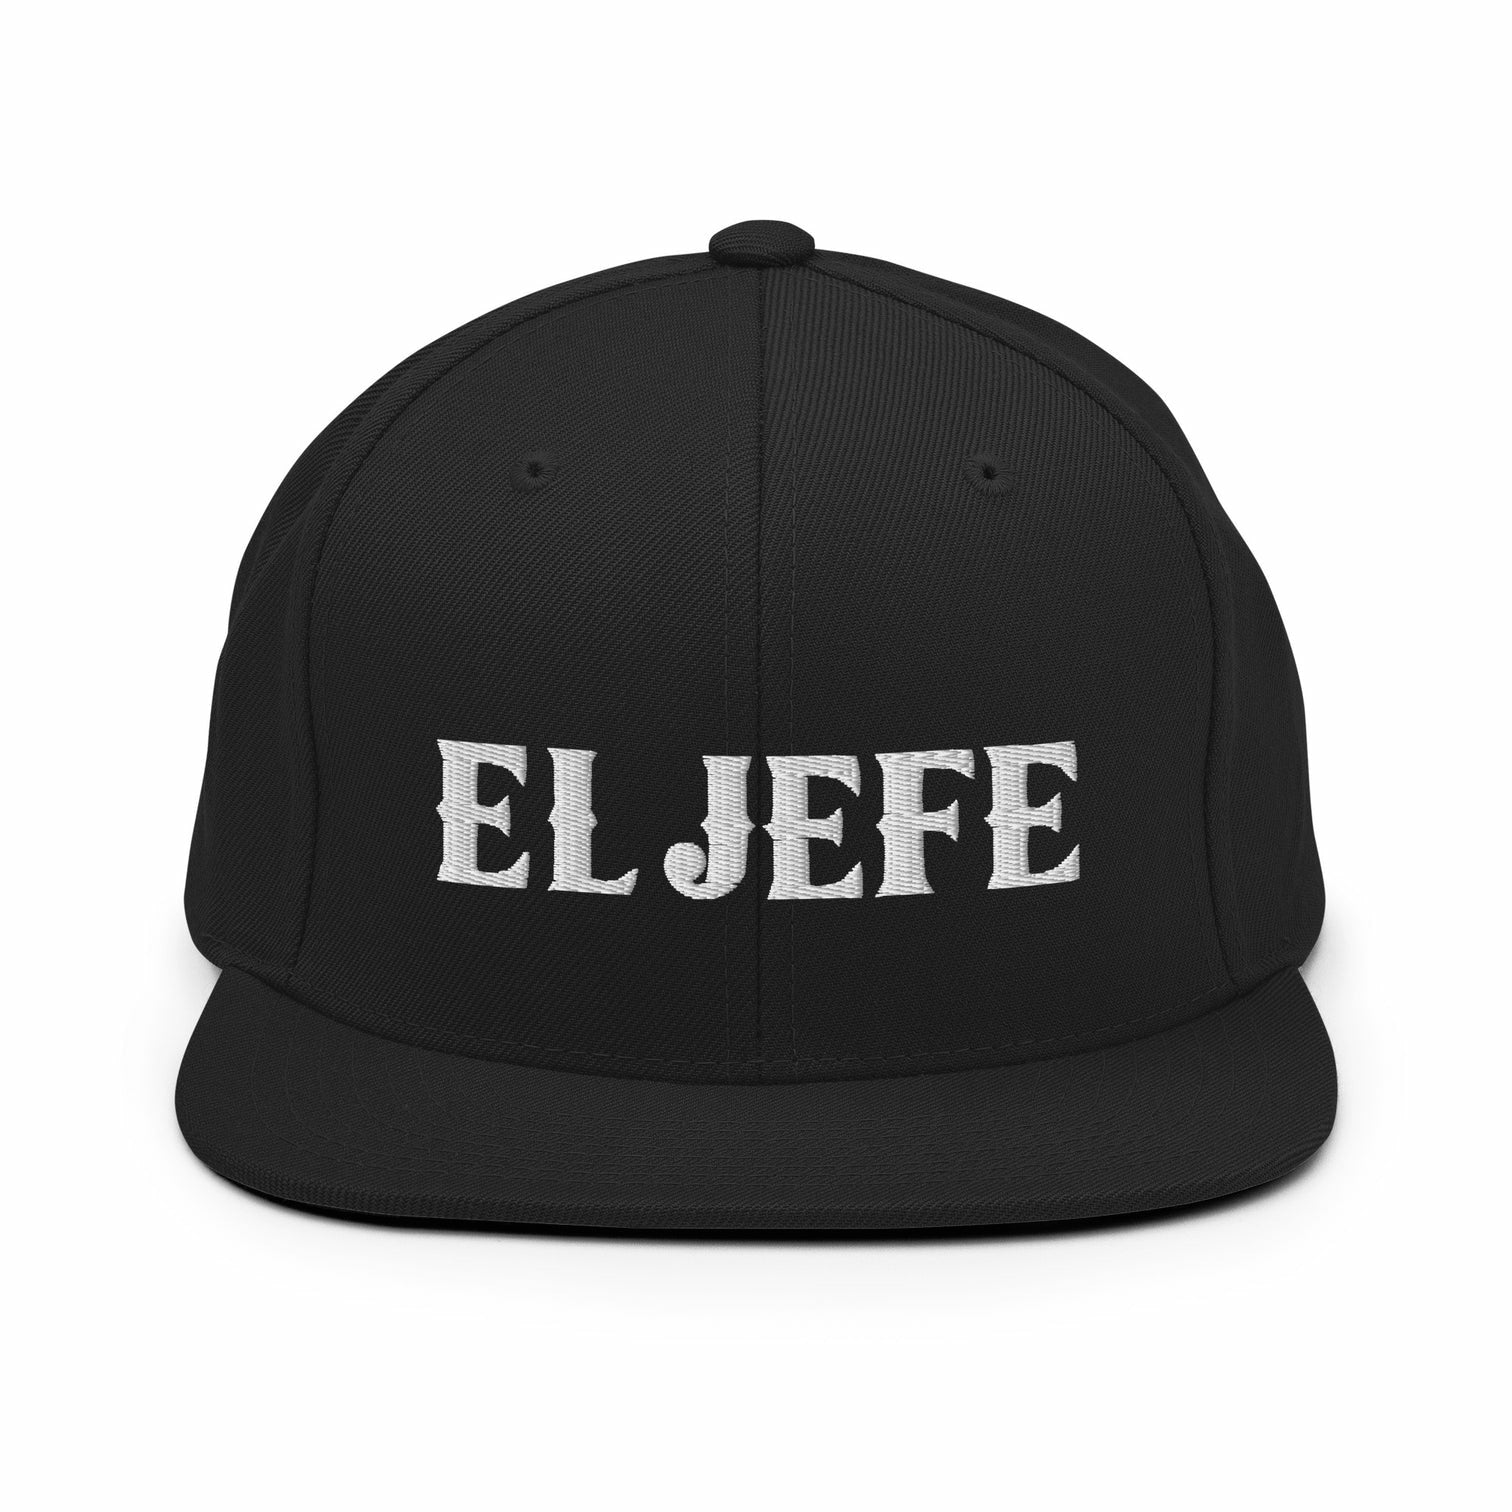 Black OG snapback cap baseball hat with embroidered white letters that say, "EL JEFE"